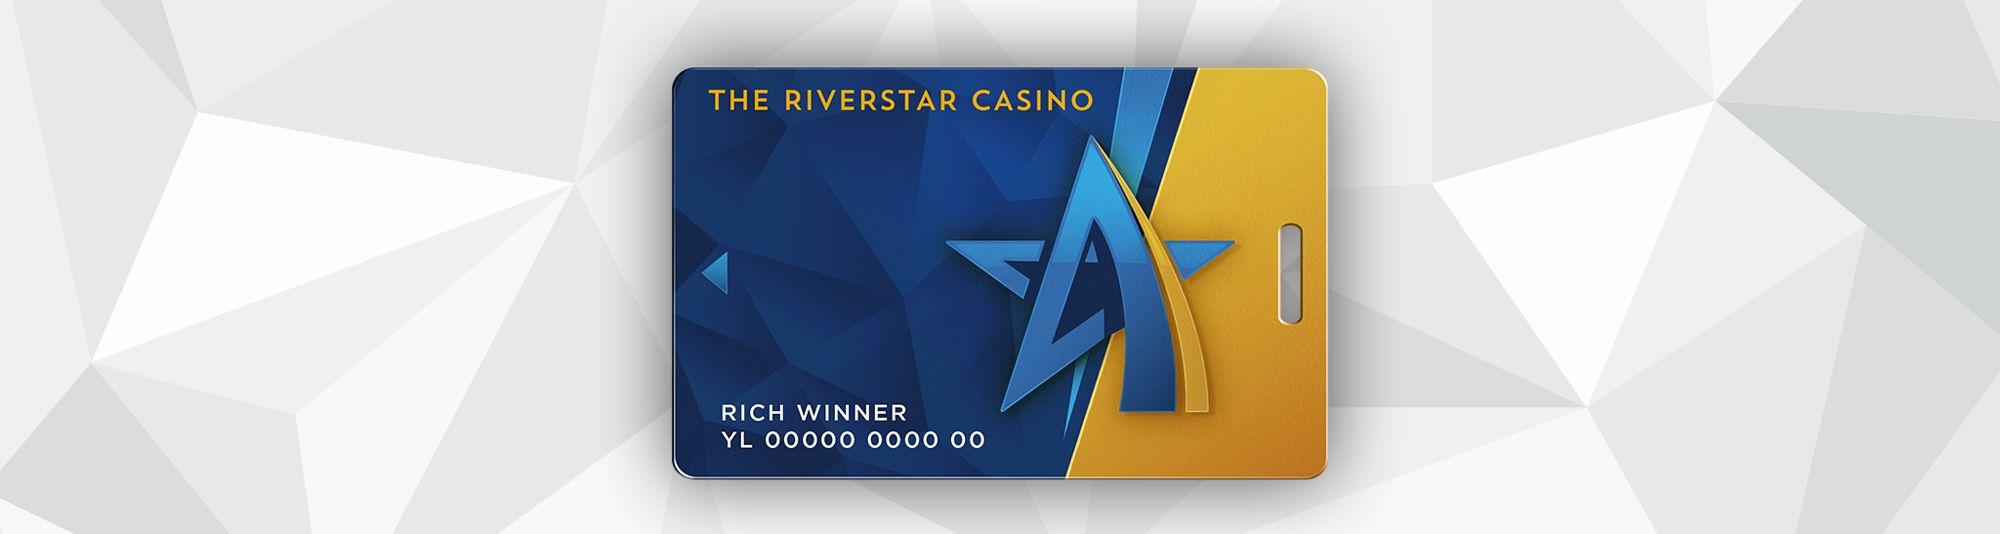 River Star Logo - Players Club | The Riverstar Casino